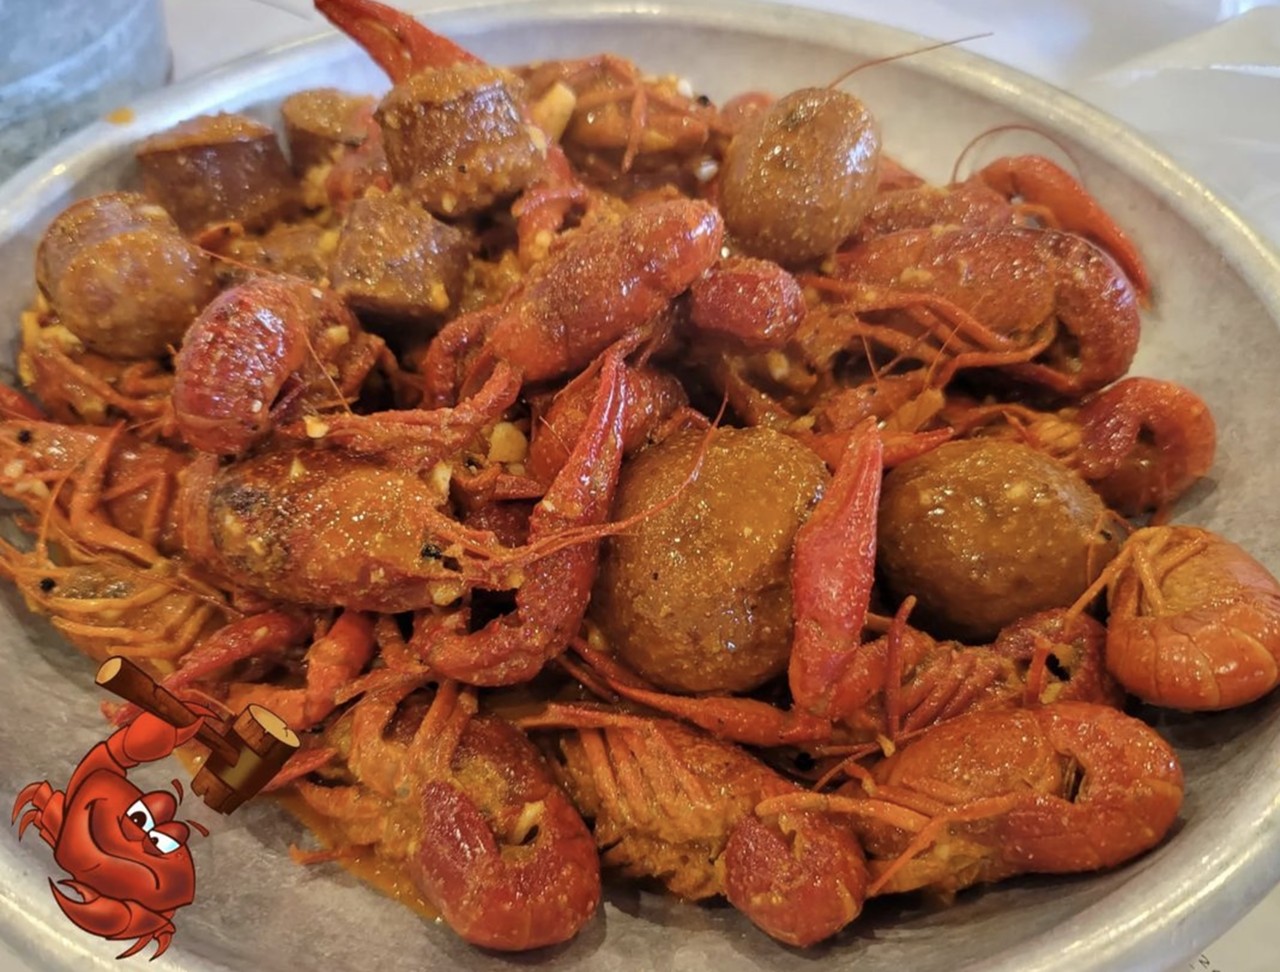 Best Crawfish
Smashin’ Crab, Multiple locations, smashincrab.com
Photo via Instagram / smashincrab